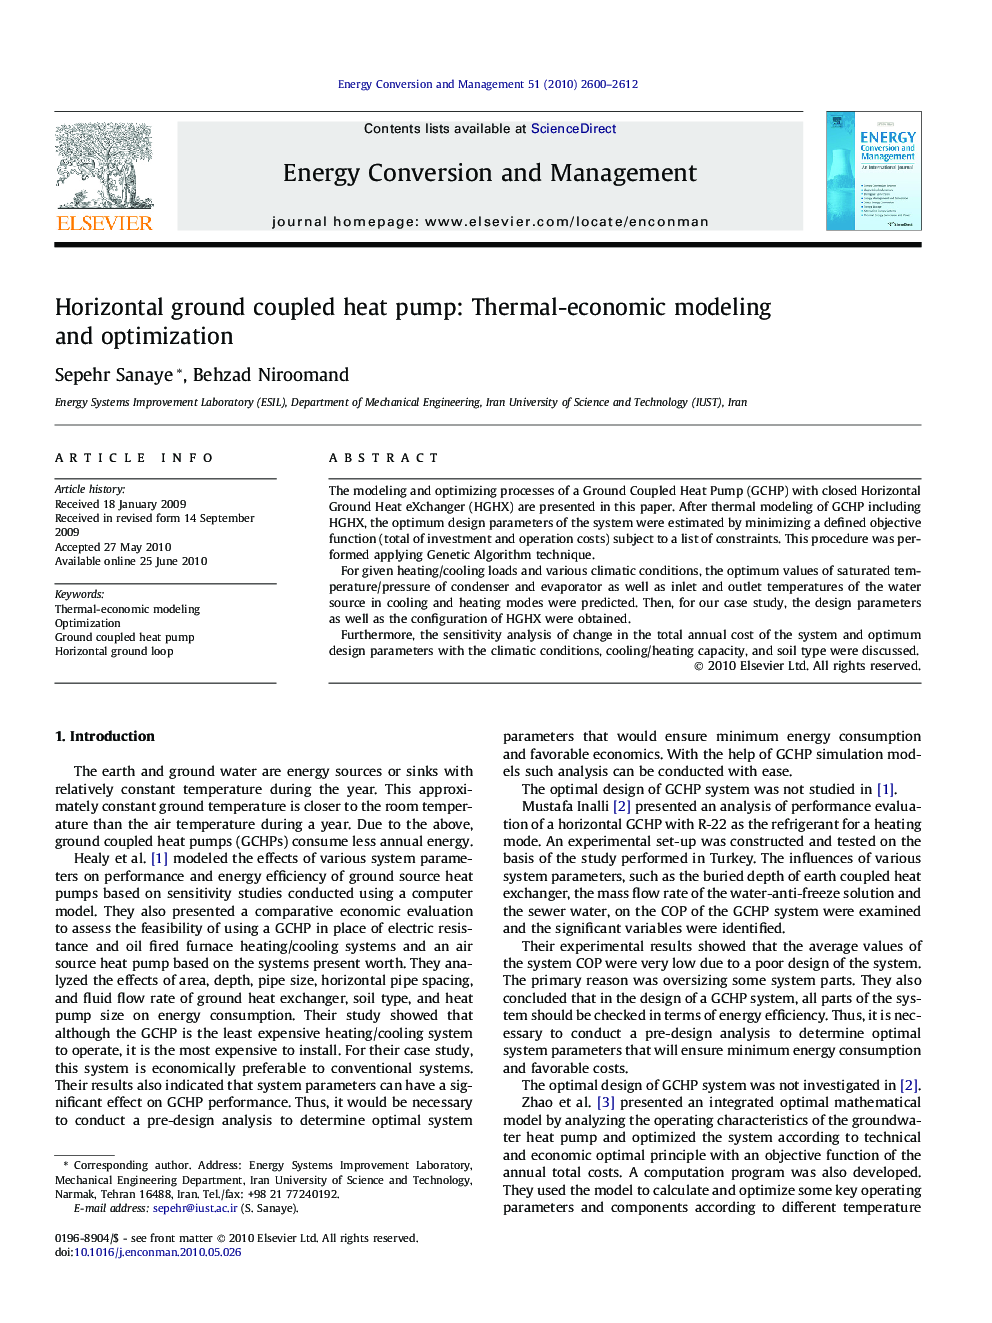 Horizontal ground coupled heat pump: Thermal-economic modeling and optimization